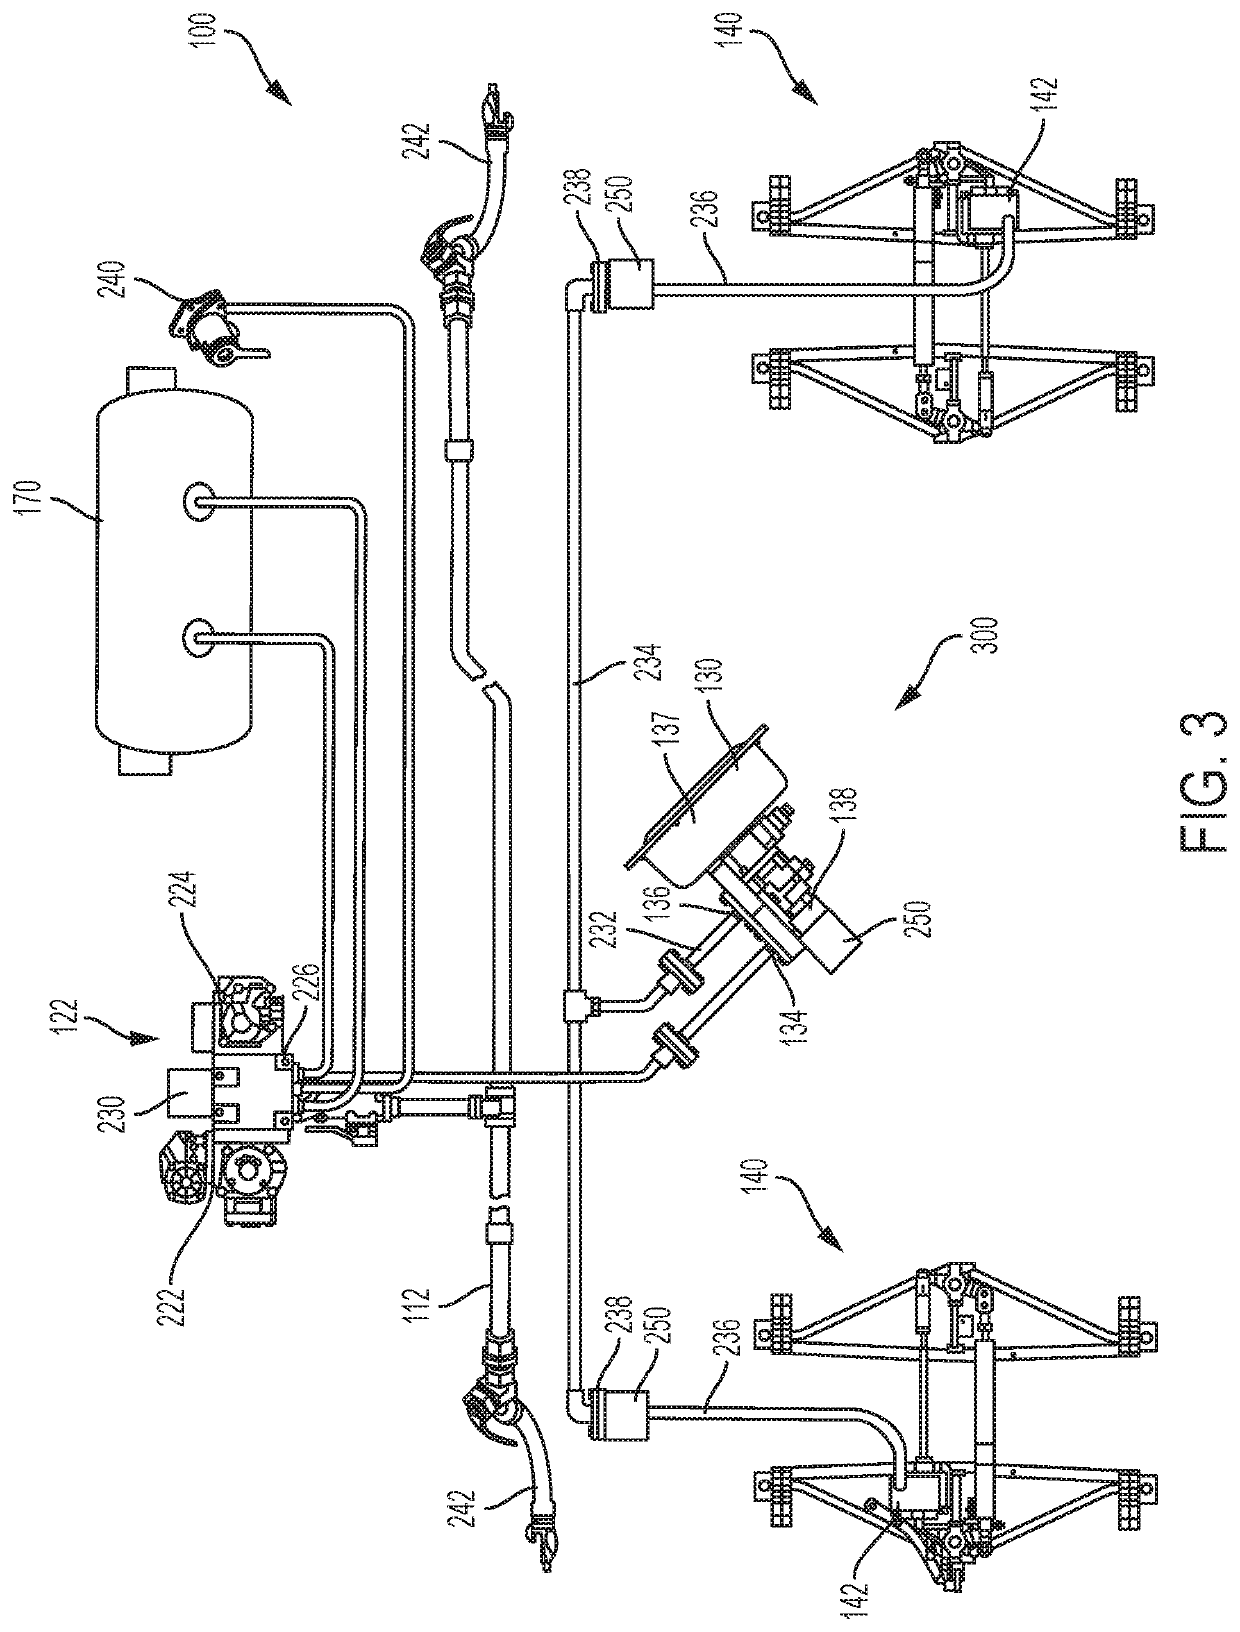 Railway Brake Cylinder Monitoring System and Method